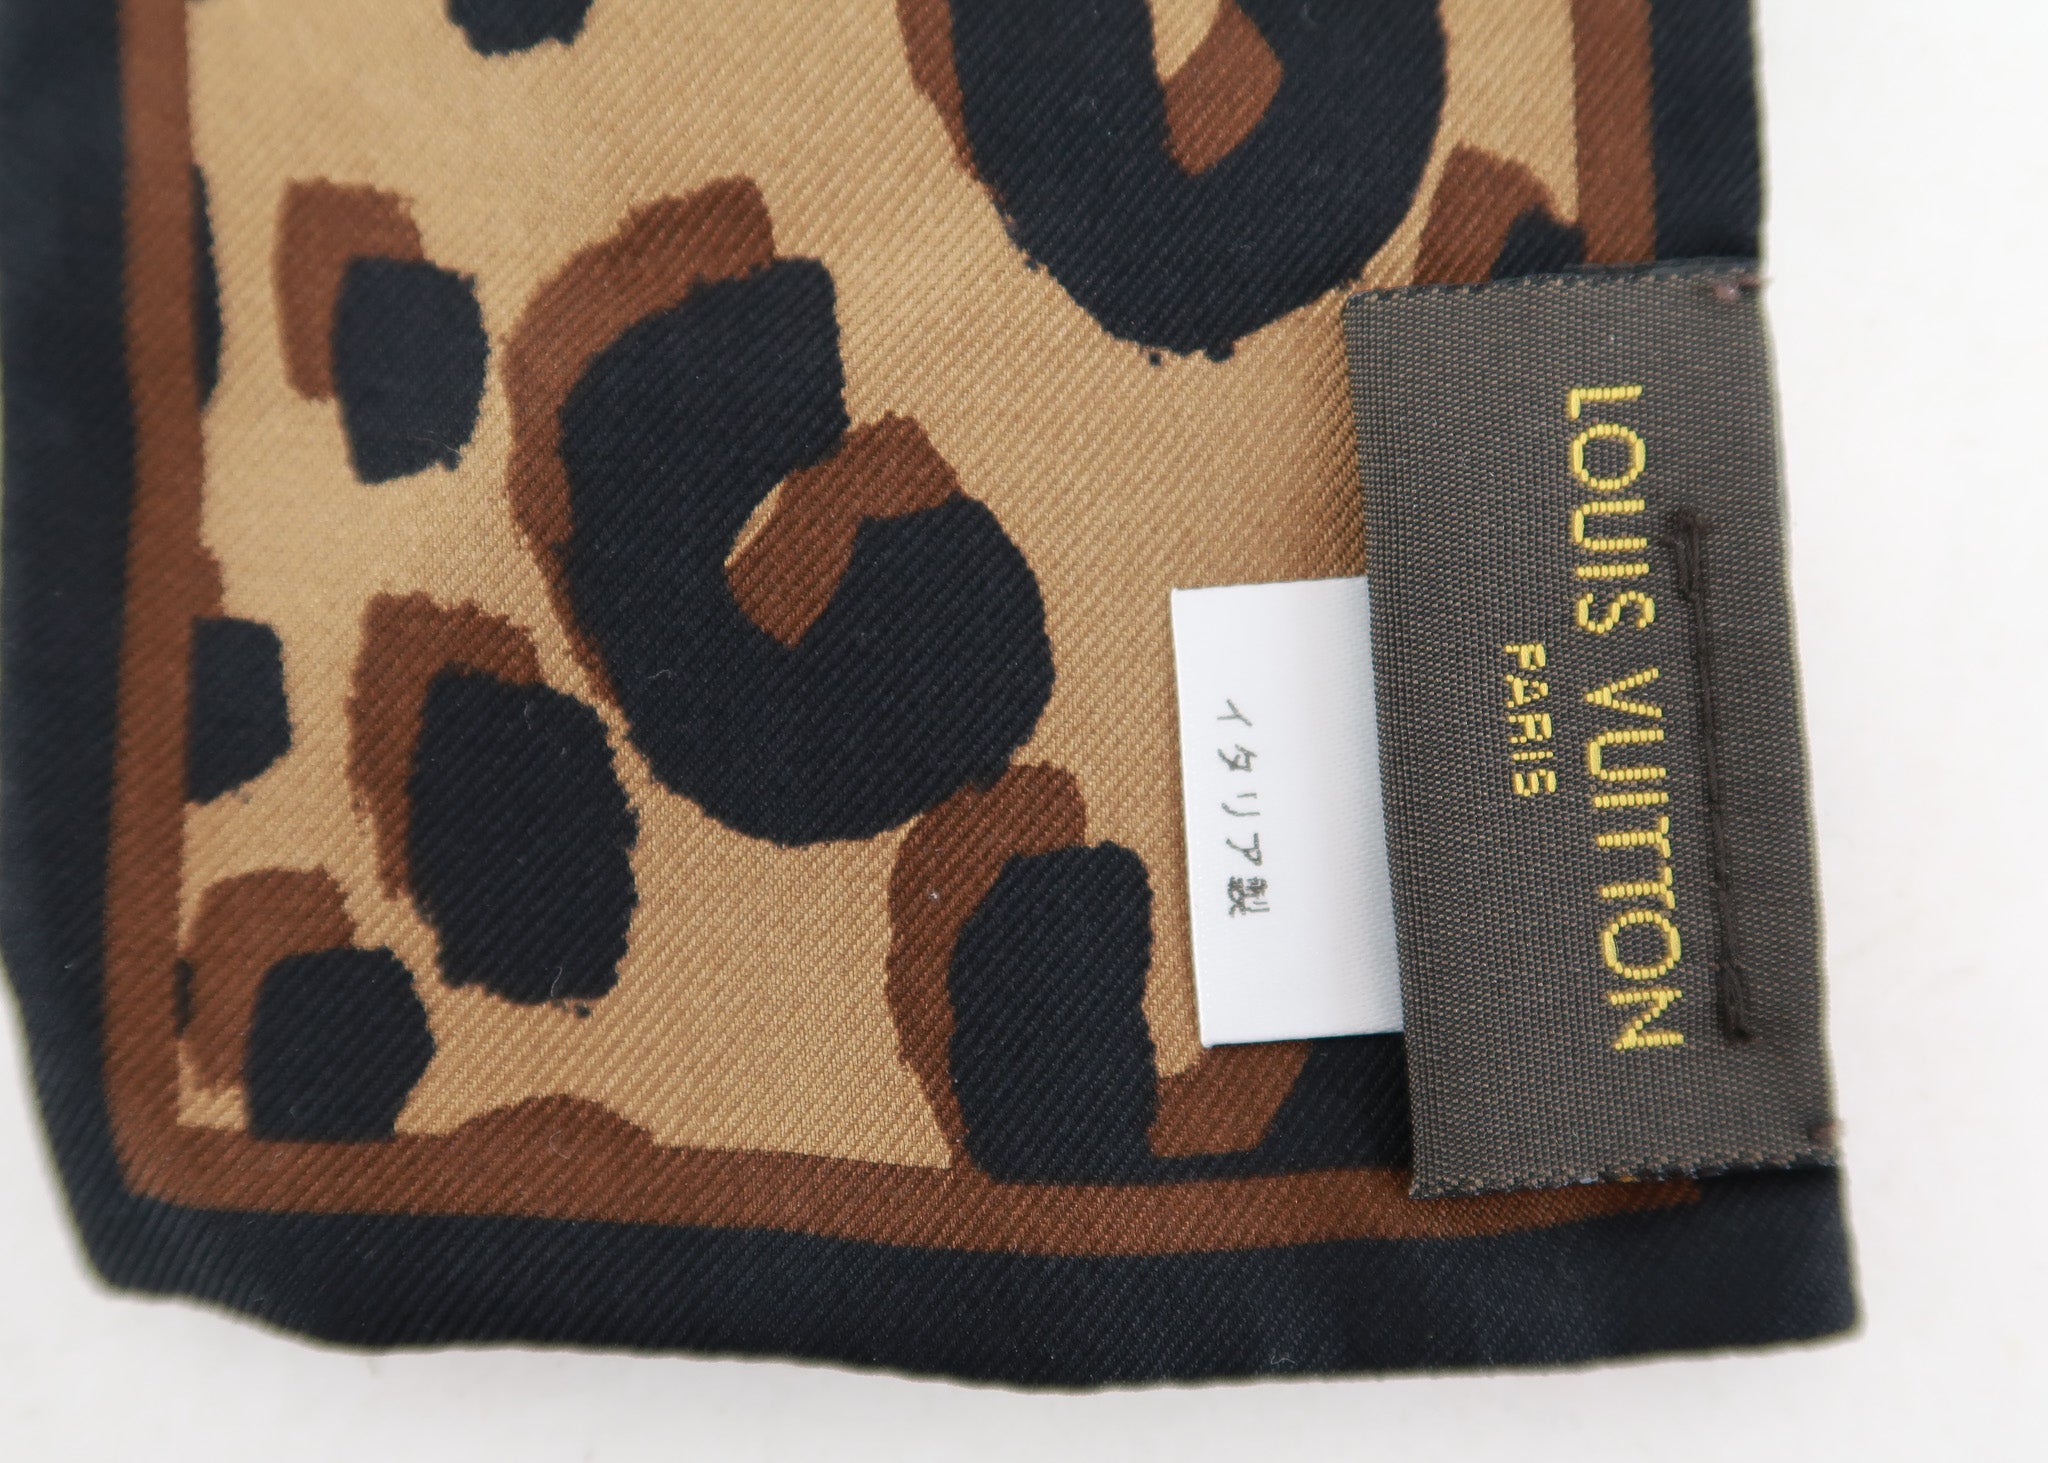 LOUIS VUITTON Leopard Print Silk Bandeau Brown/Black